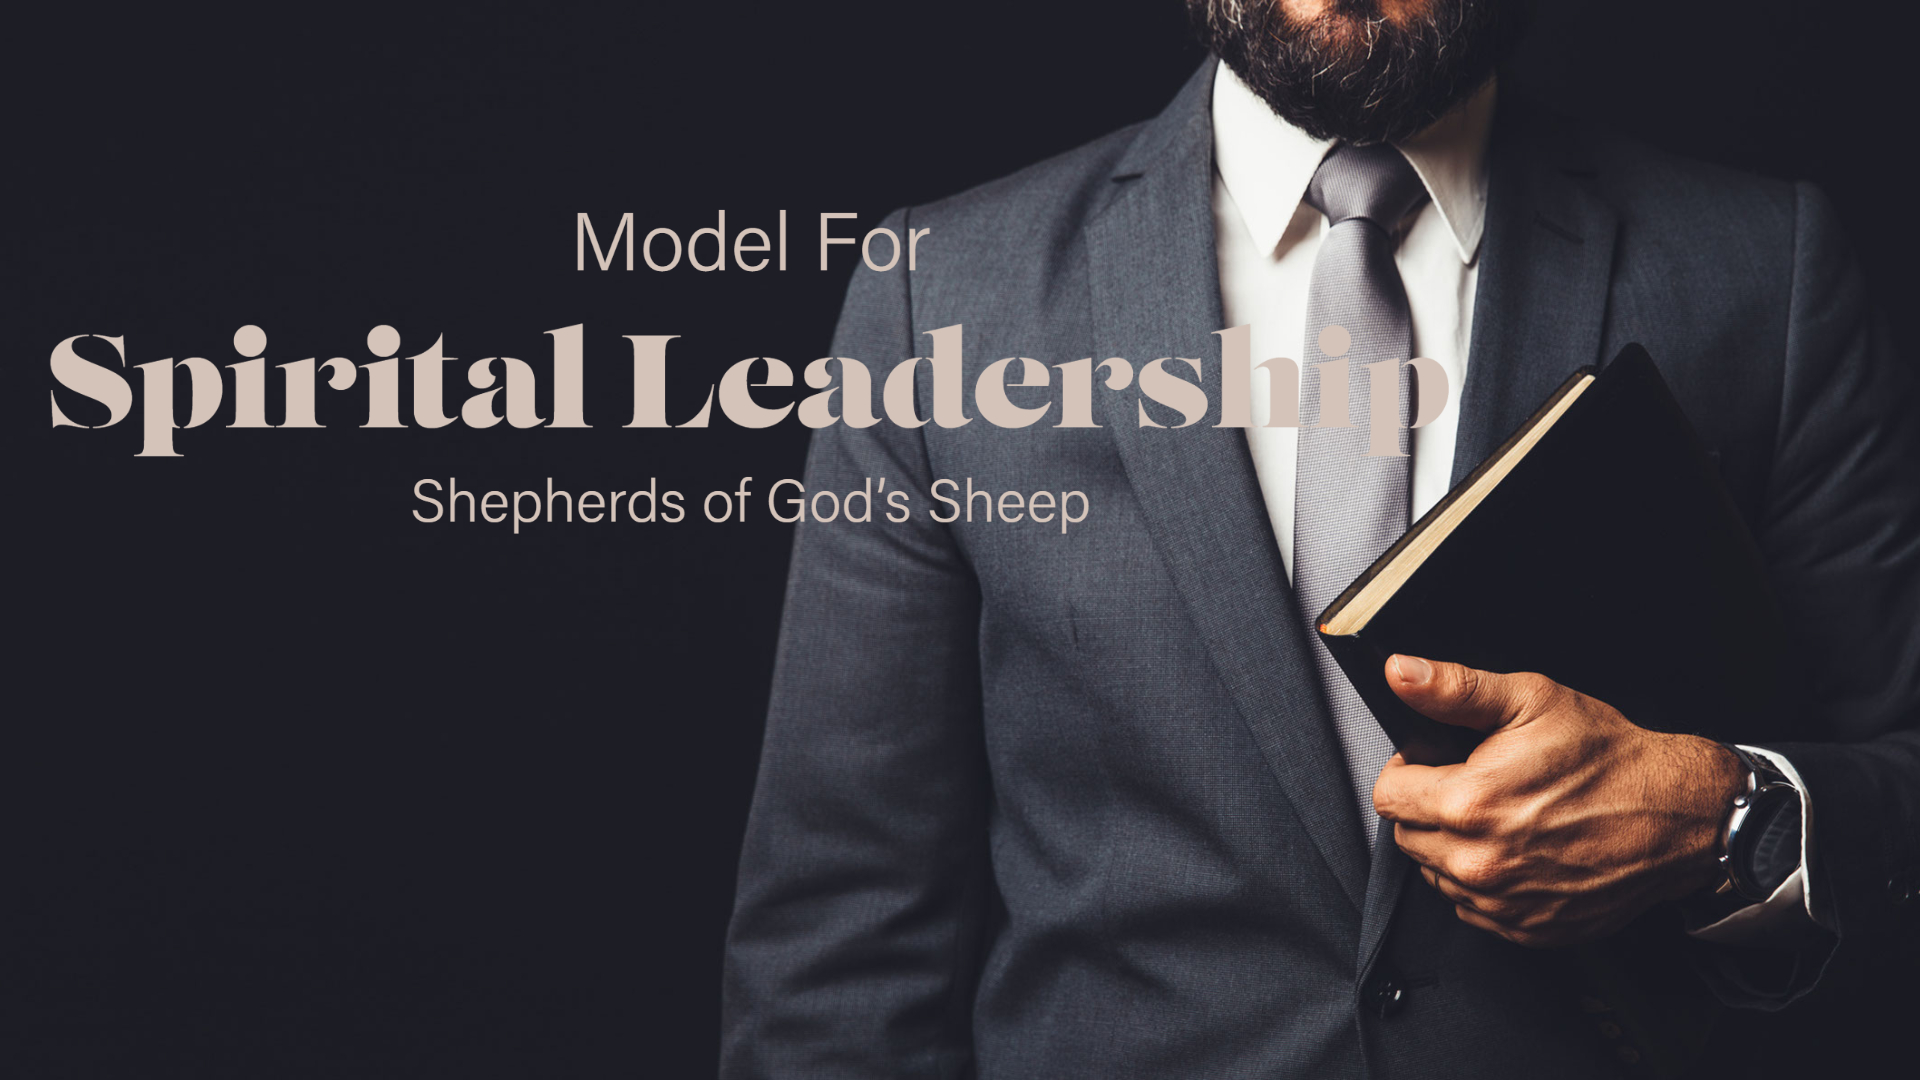 Shepherds of God’s Sheep